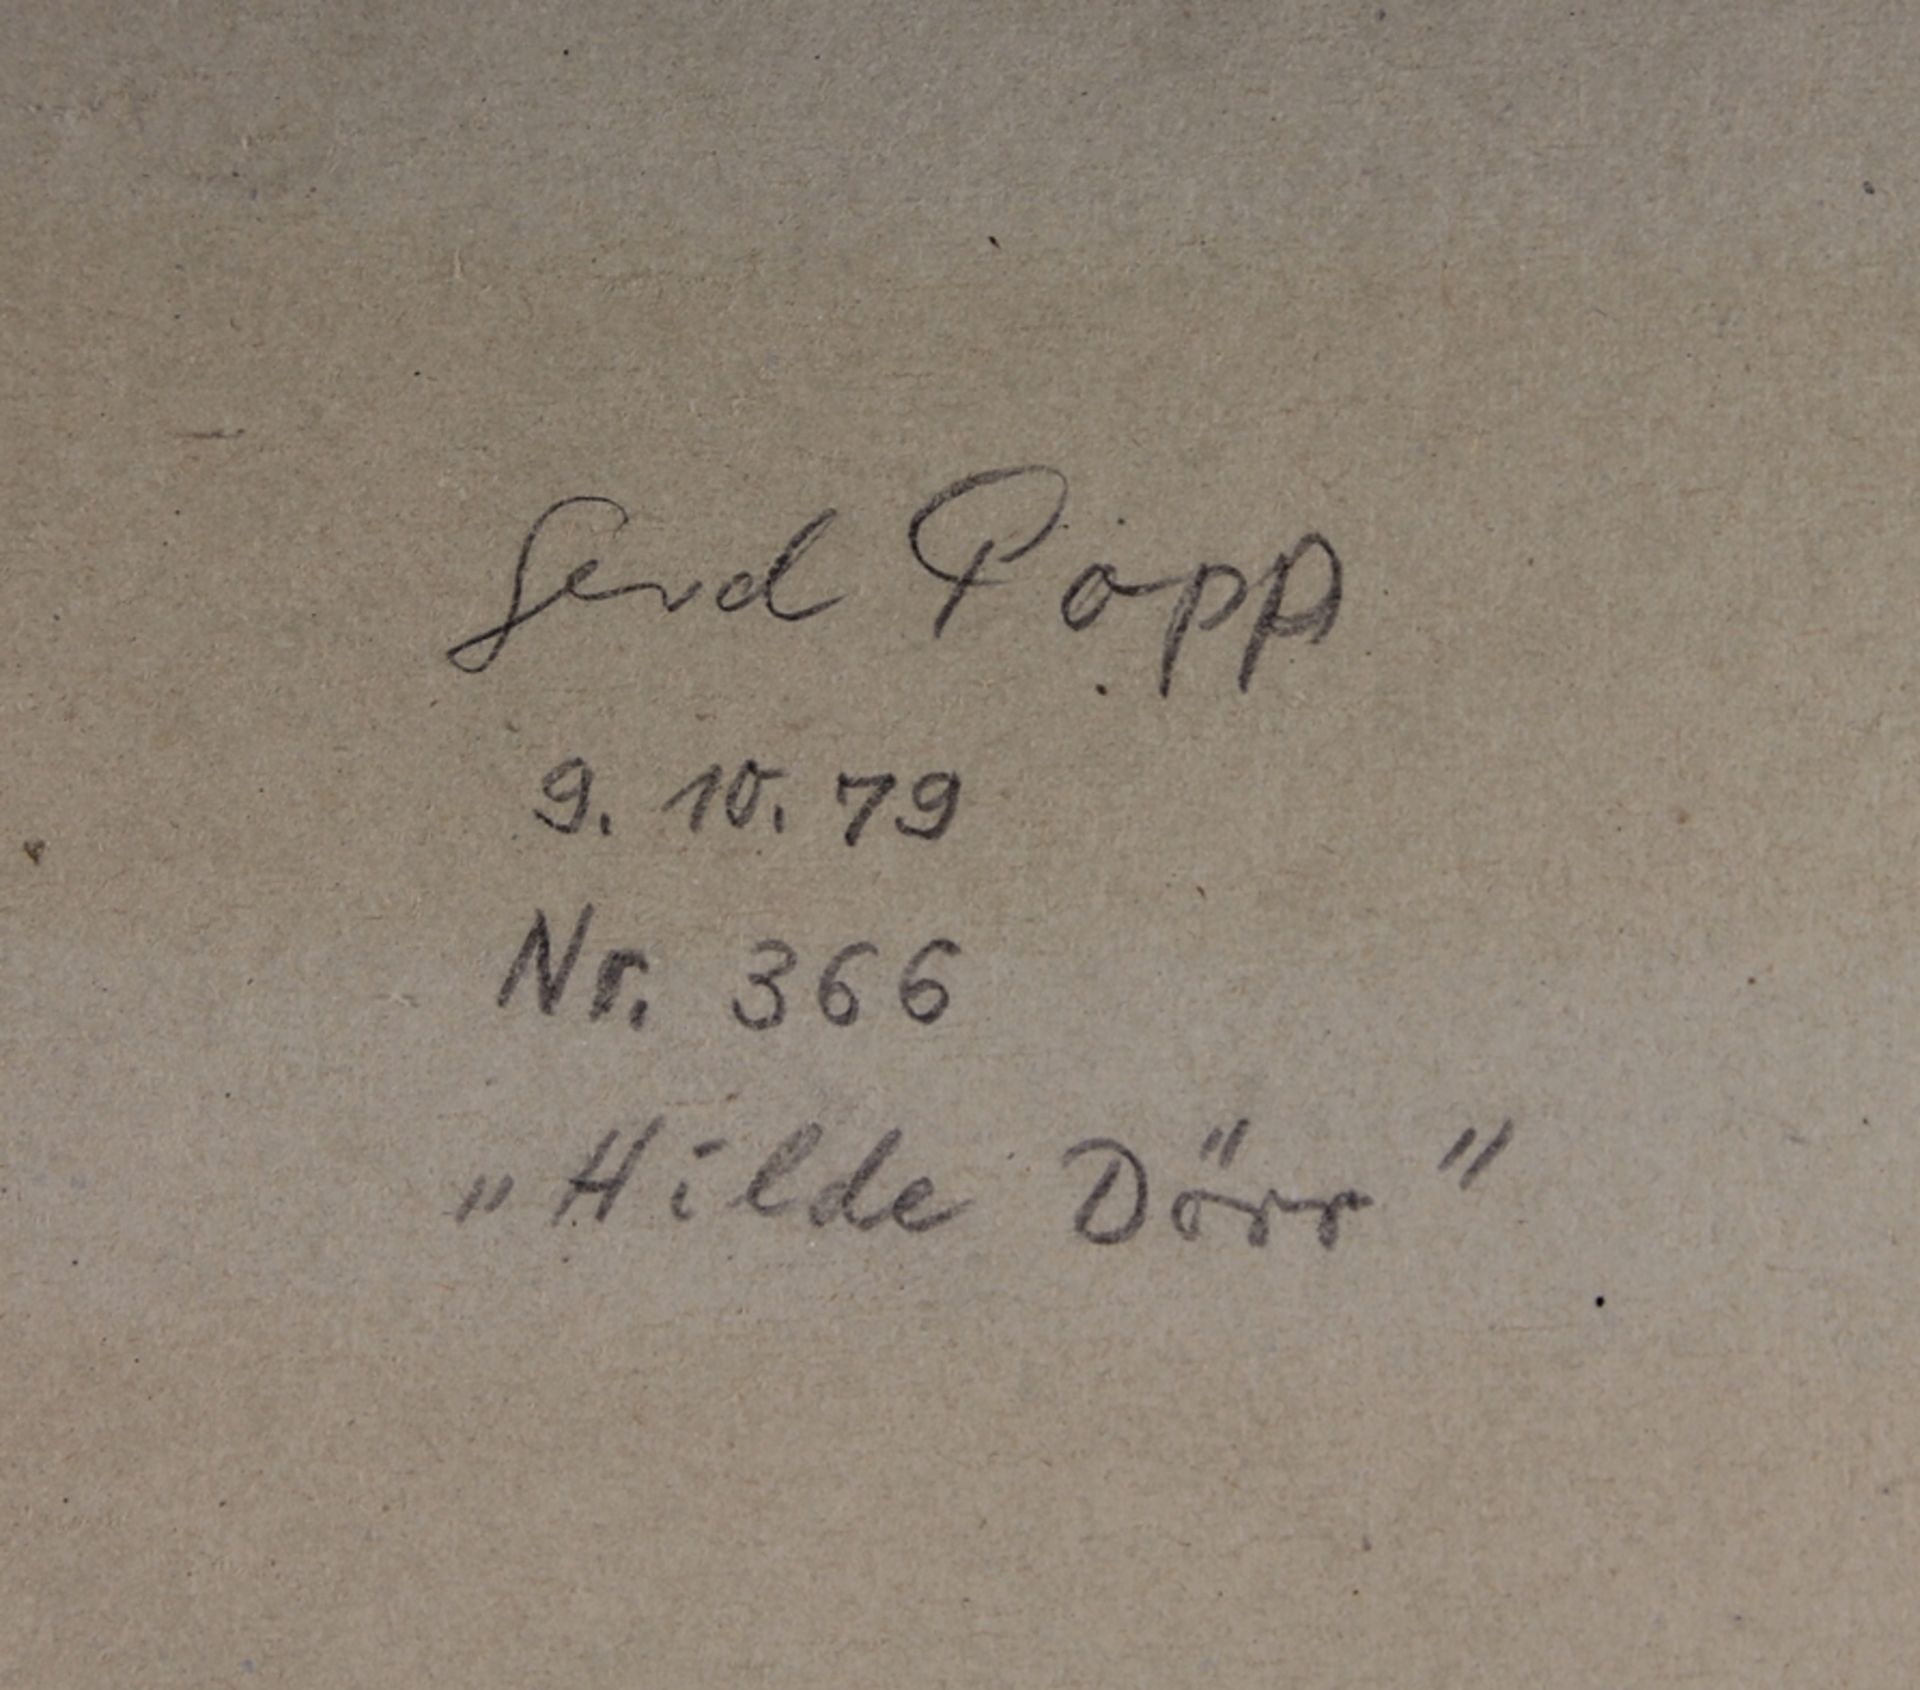 Popp, Gerd - Image 3 of 3